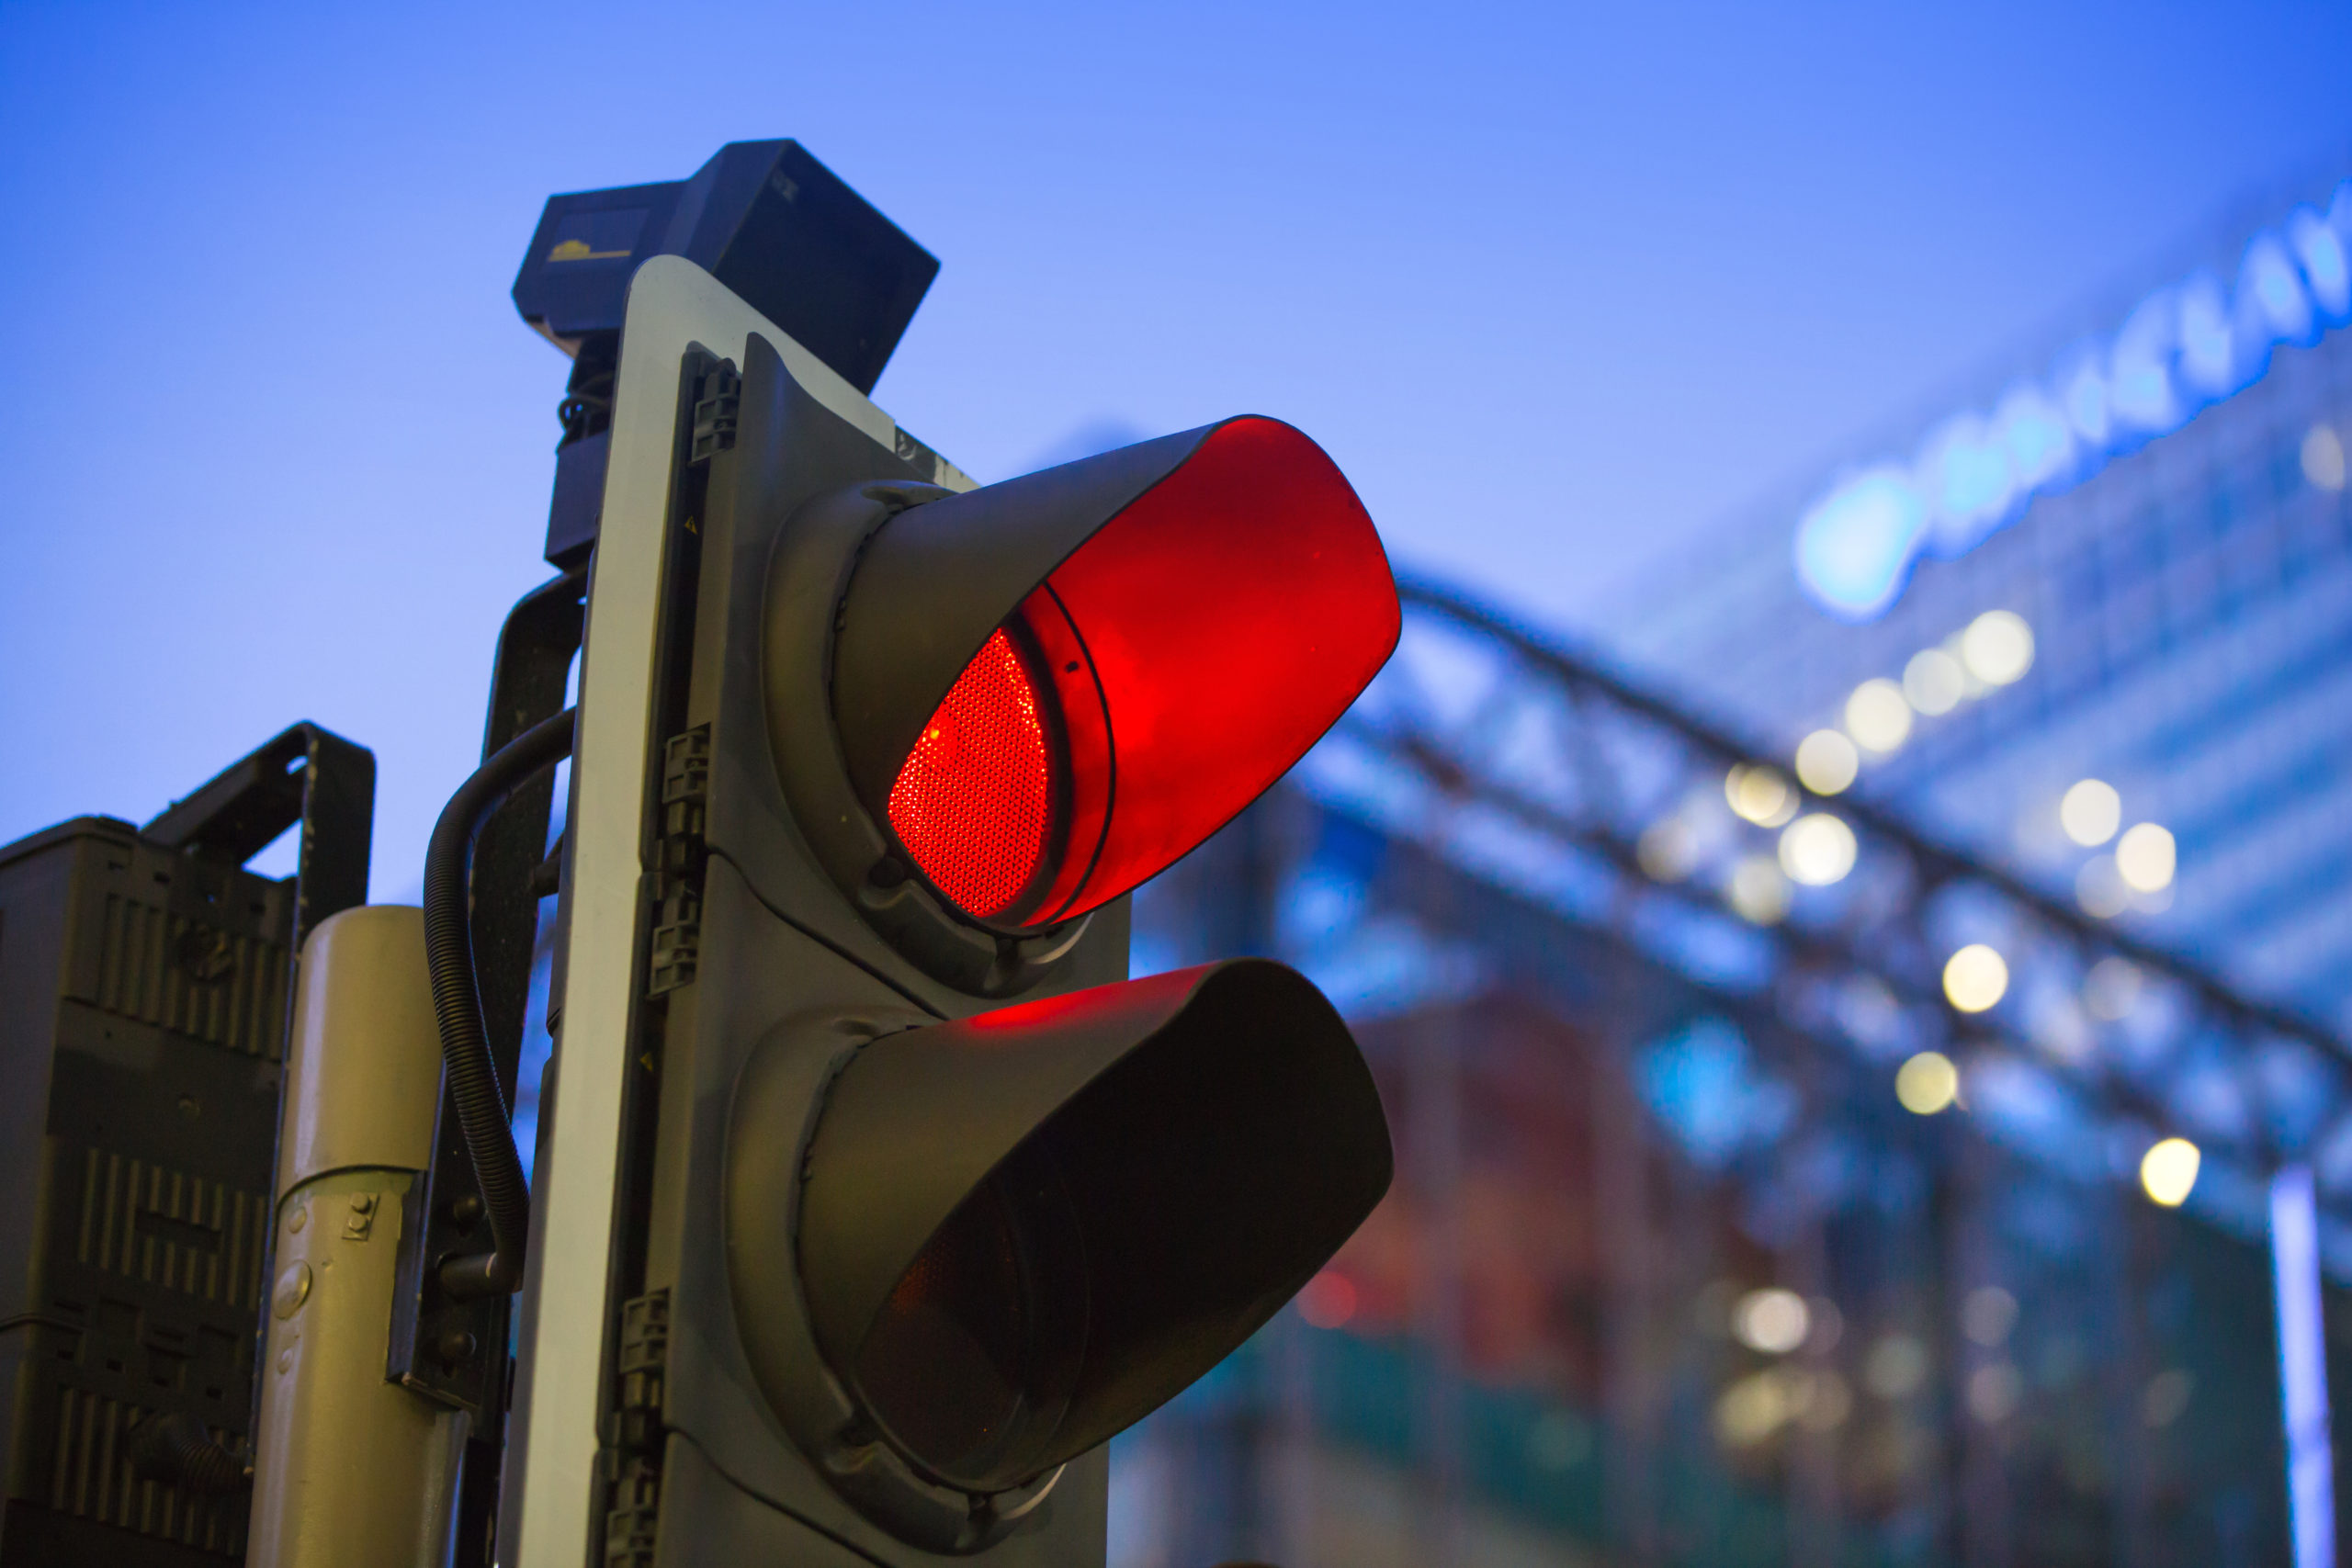 Traffic light red. Красный светофор. Свет светофора. Красный цвет светофора. Запрещающий сигнал светофора.